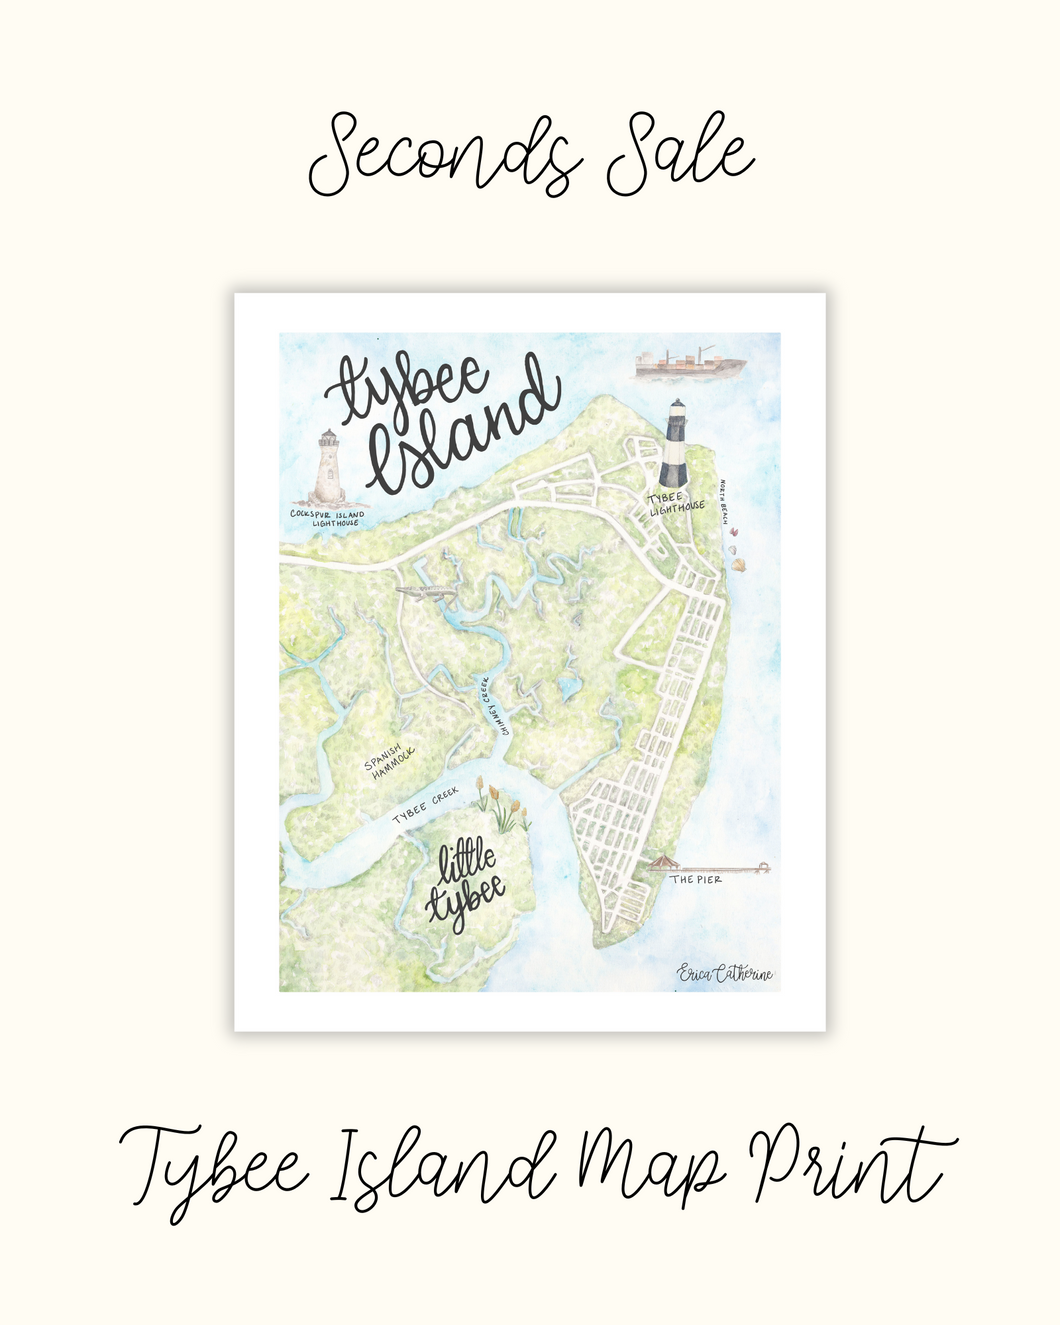 Tybee Island Map Print - Seconds Sale